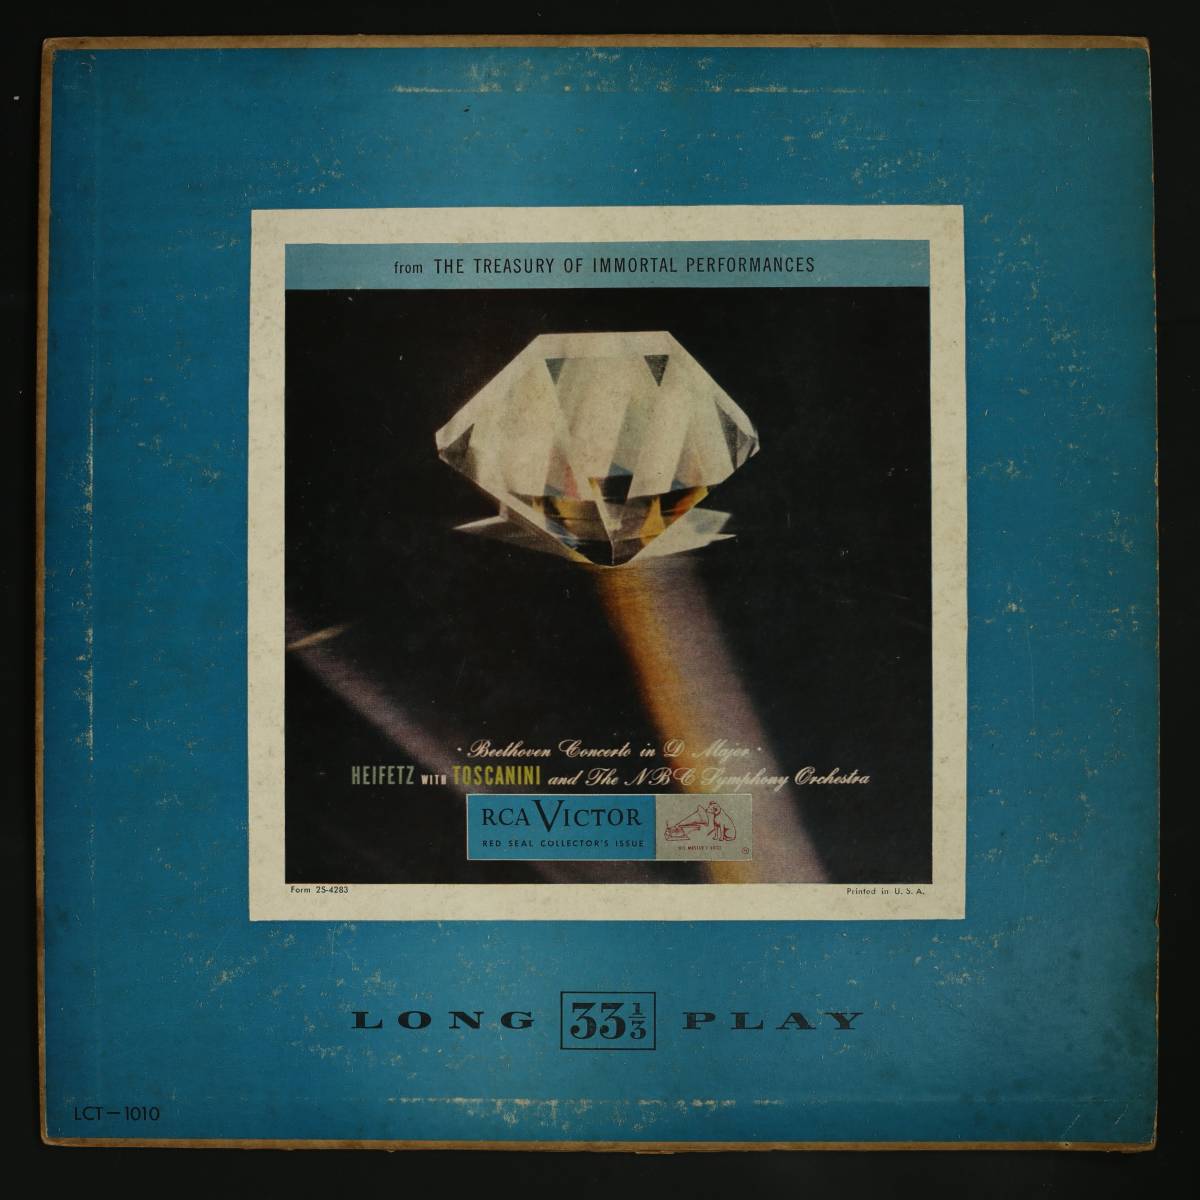 【US盤LP】ハイフェッツ,トスカニーニ,NBC響/ベートーヴェン:ヴァイオリン協奏曲(並下品,赤金,FLAT,1953,Heifetz,Arturo Toscanini)の画像1